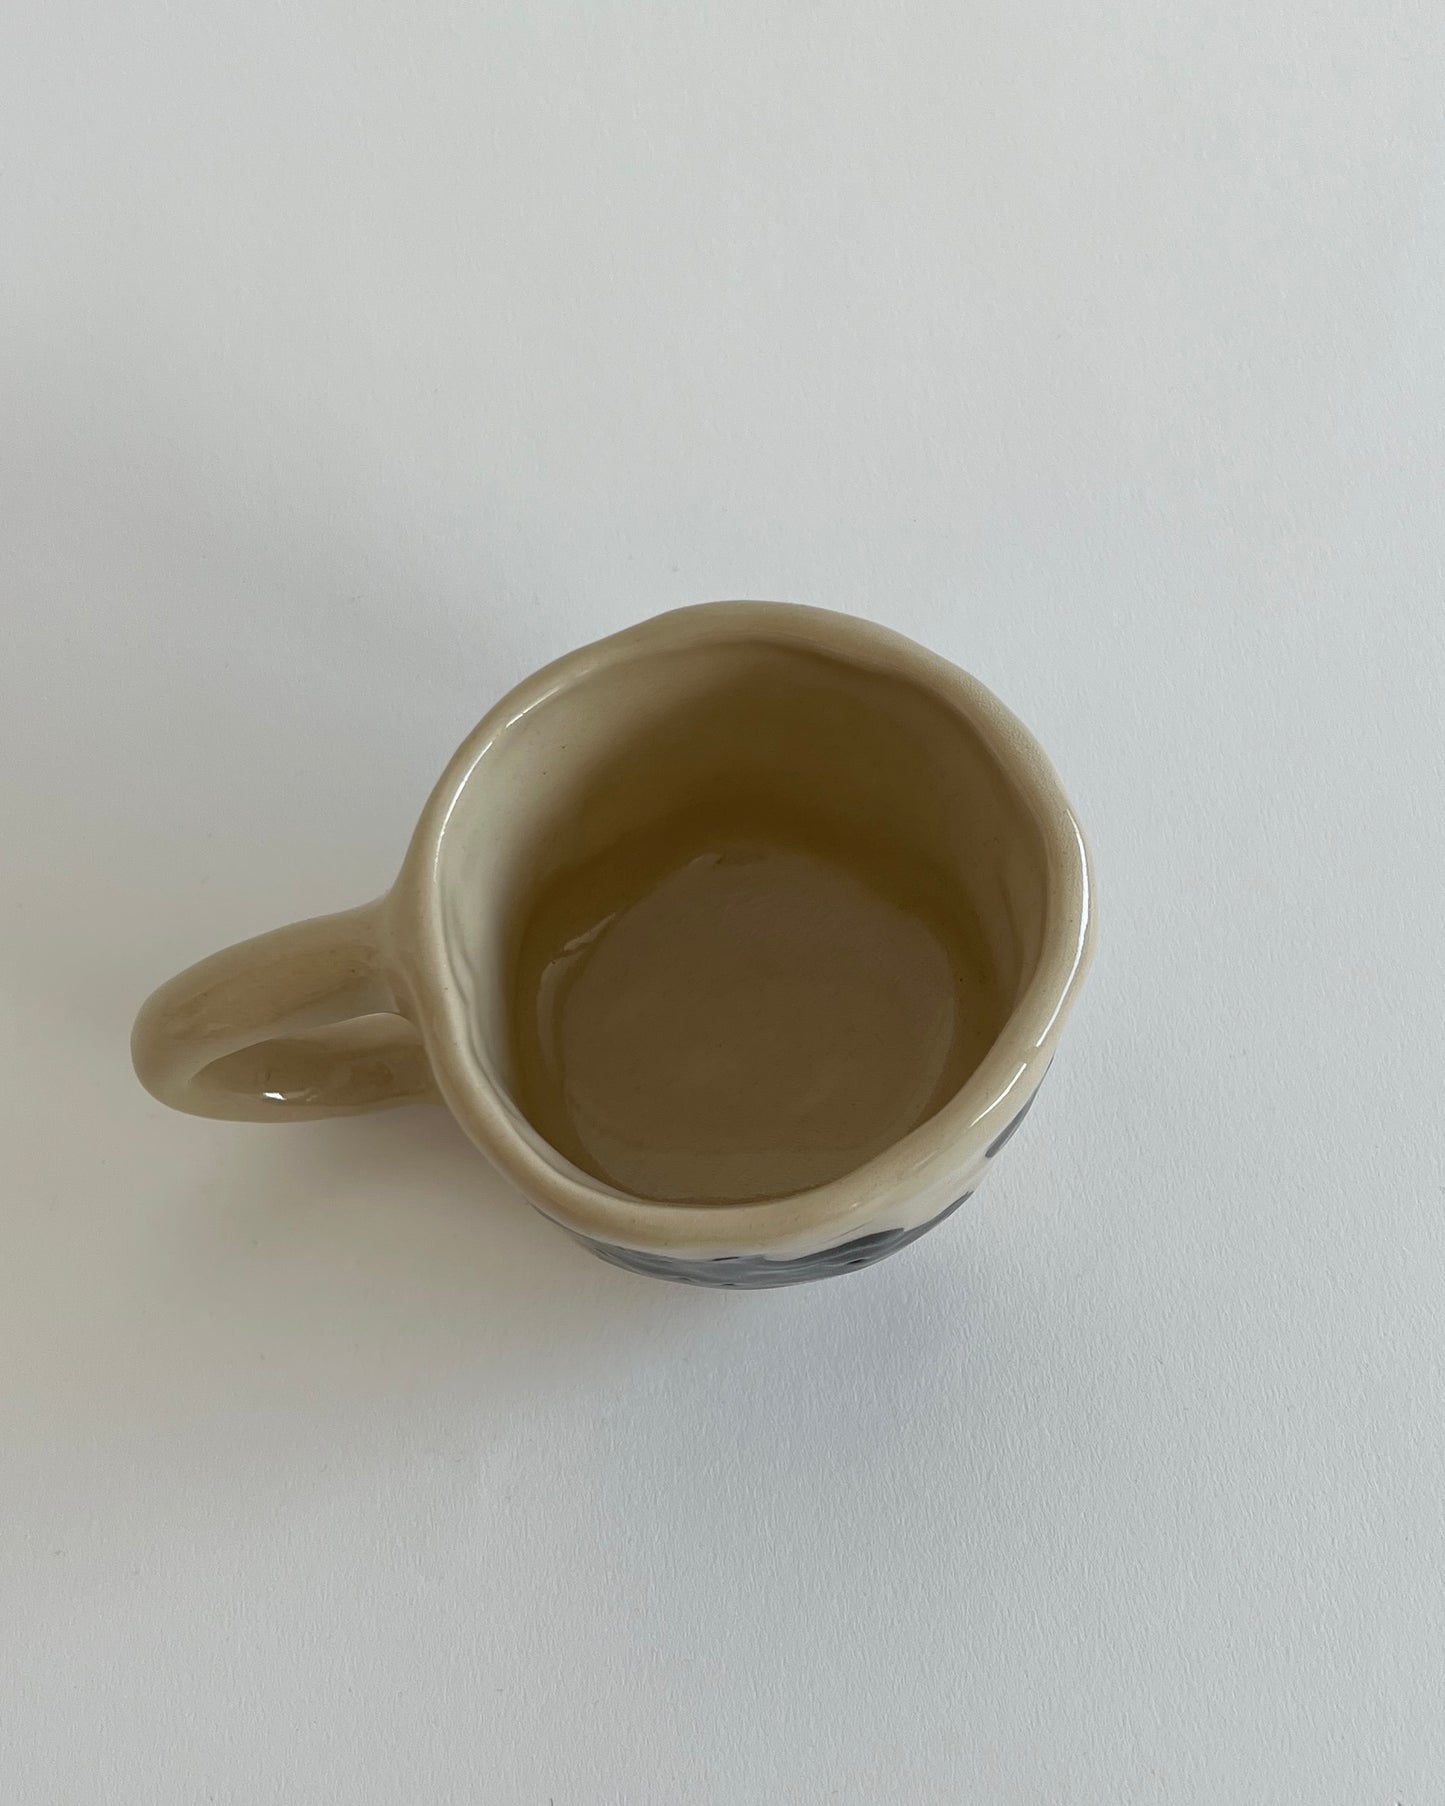 Handmade Coffe Mug